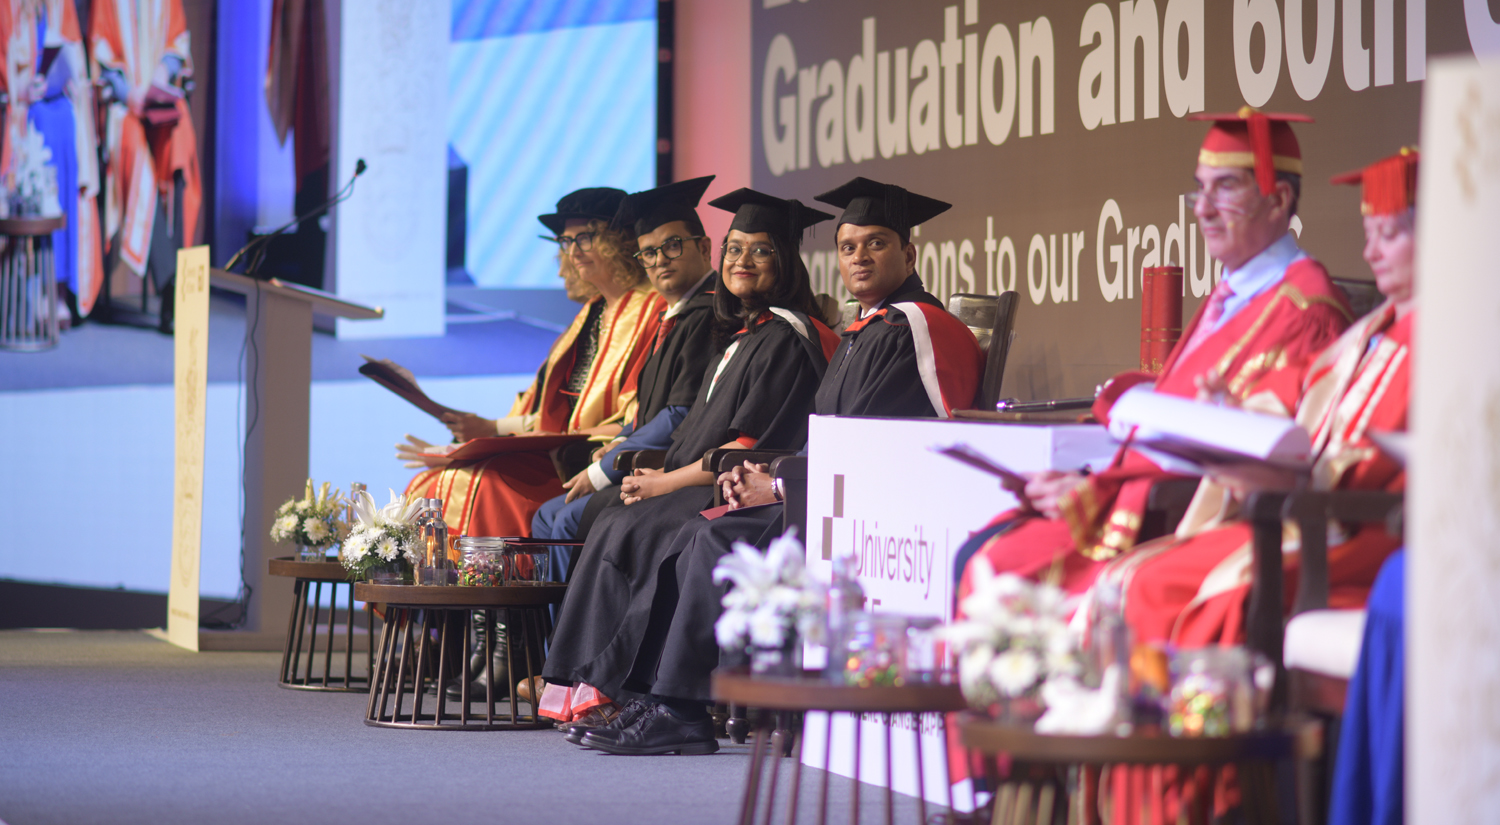 Vice-Chancellor Award winners Ankit Mehrotra, Sanchita Ain and Manish Michael during the India Graduation ceremony.